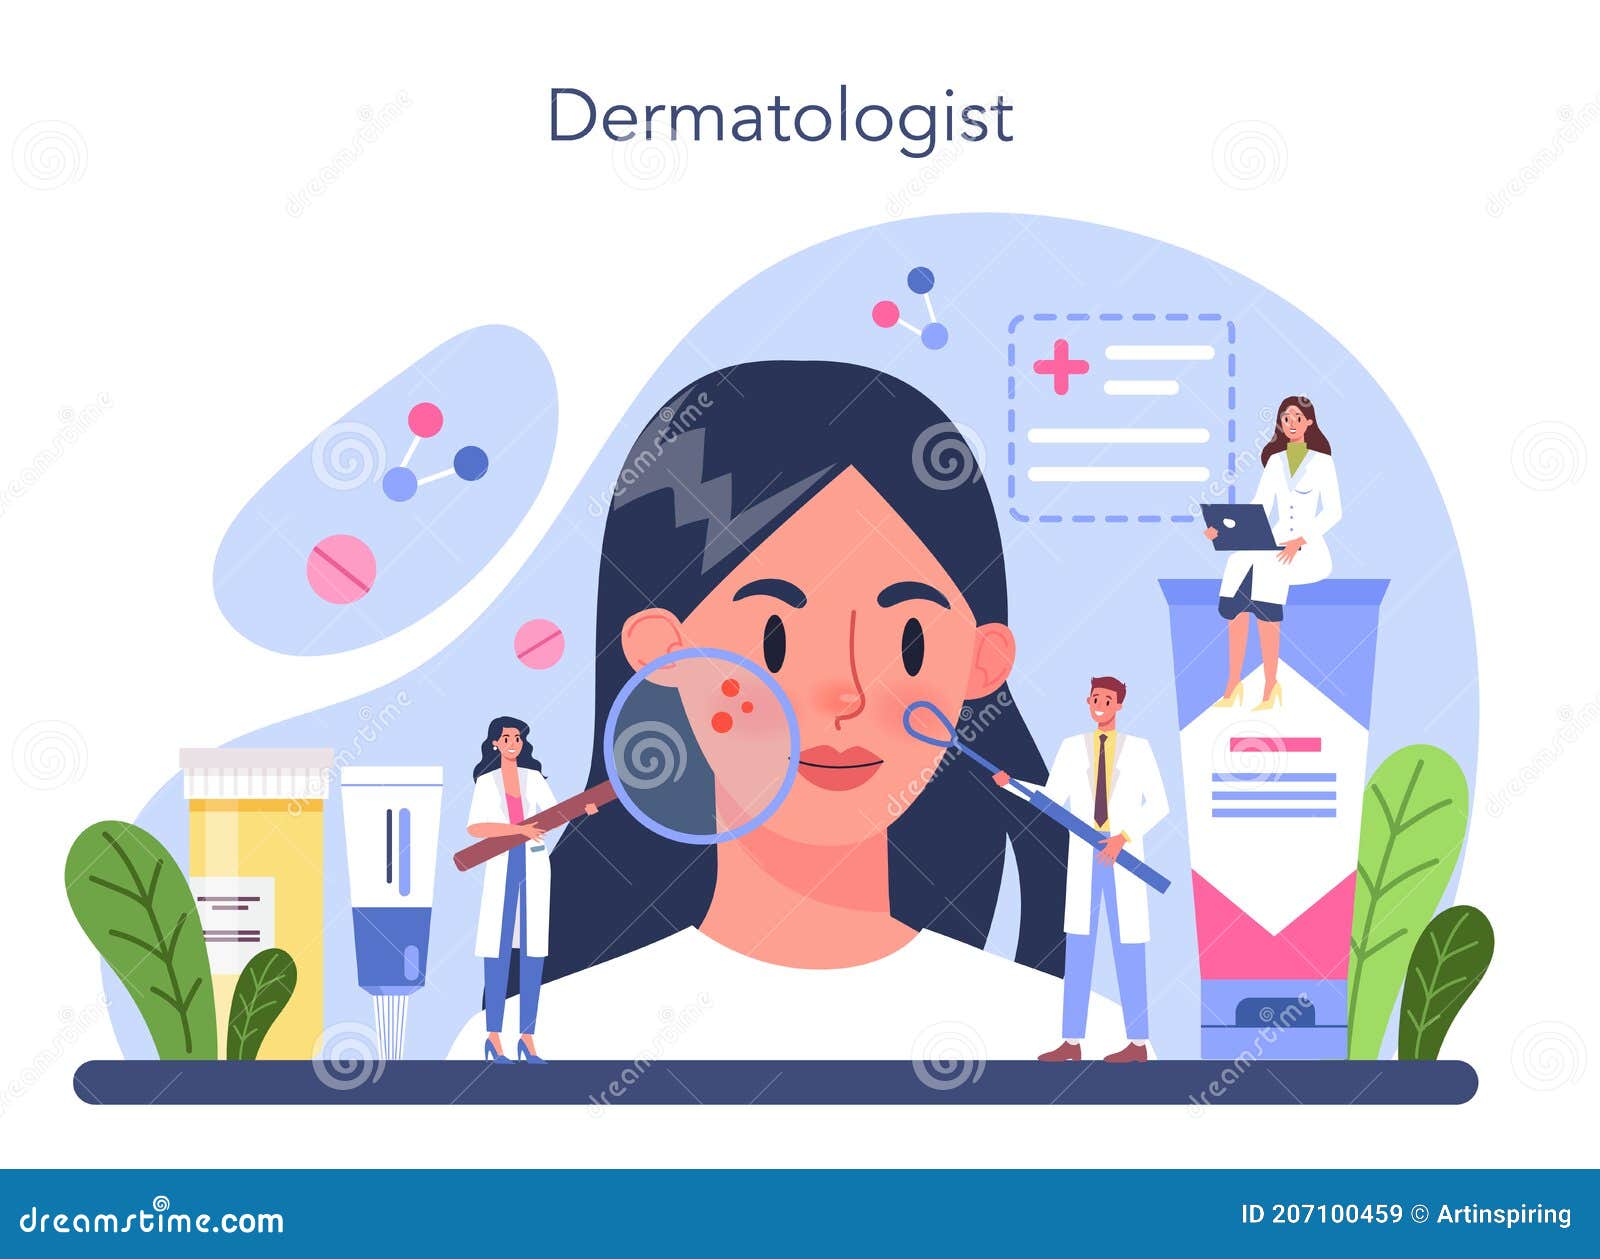 dermatologist concept. dermatology and trichologist specialist, skin or hair